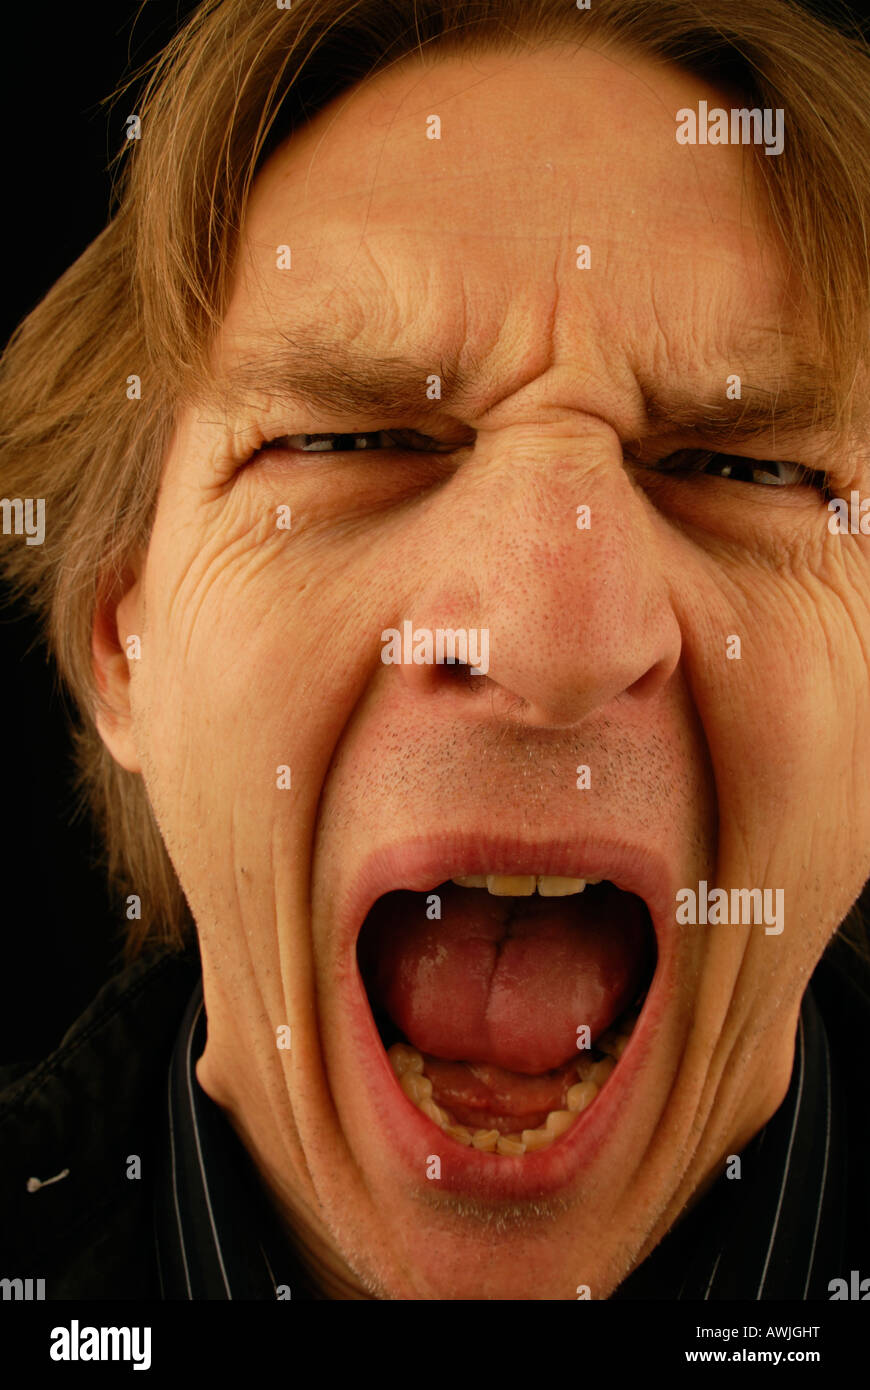 Scream. No. 3 - Man screaming. Anger. Stock Photo